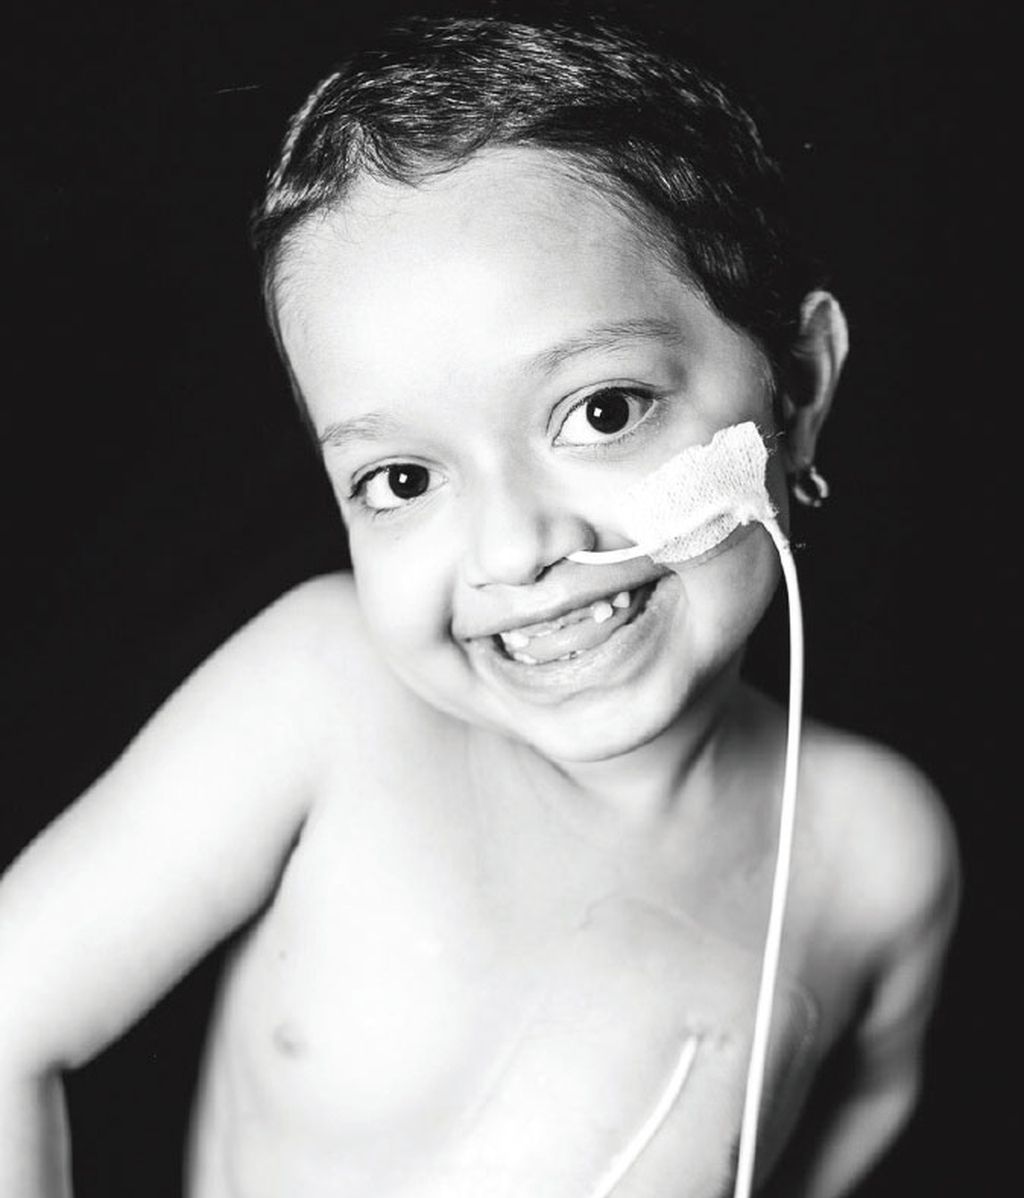 La sonrisa del trasplante infantil